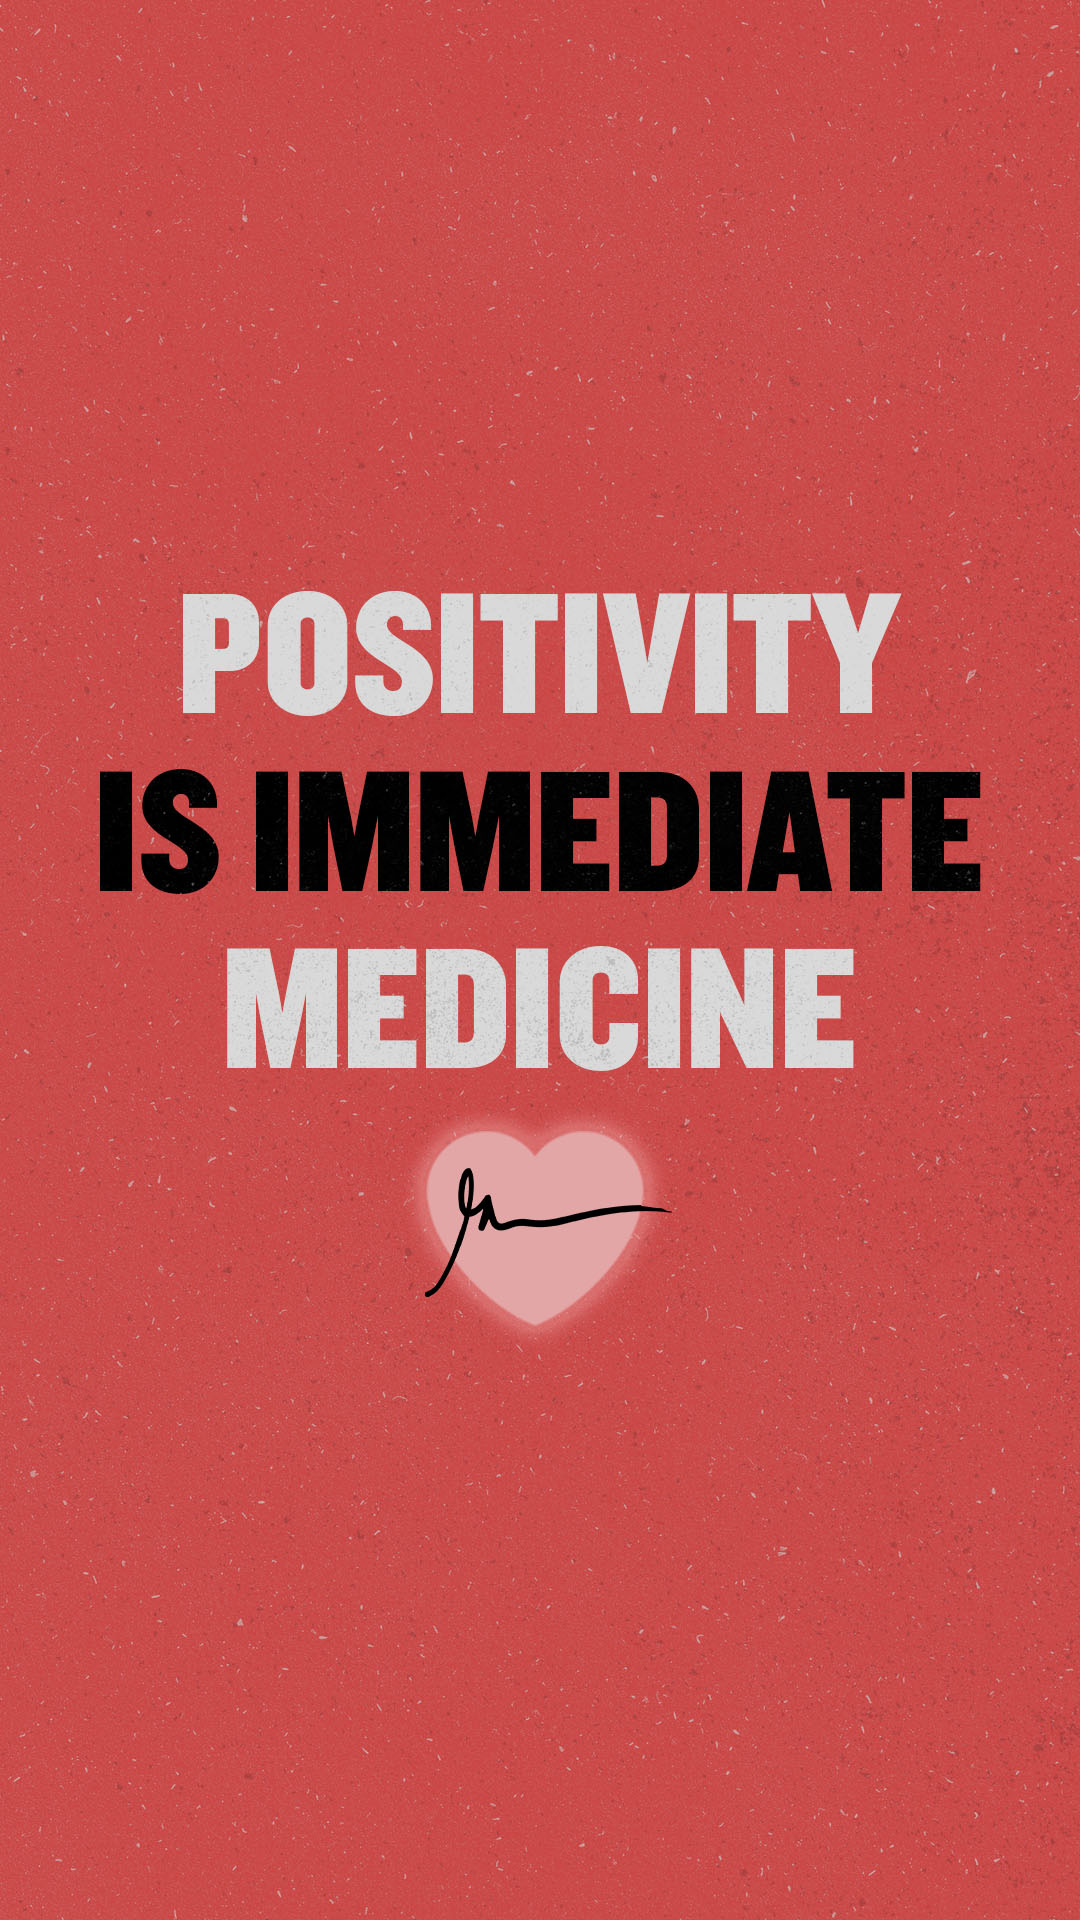 Positivity is the immediate medicine